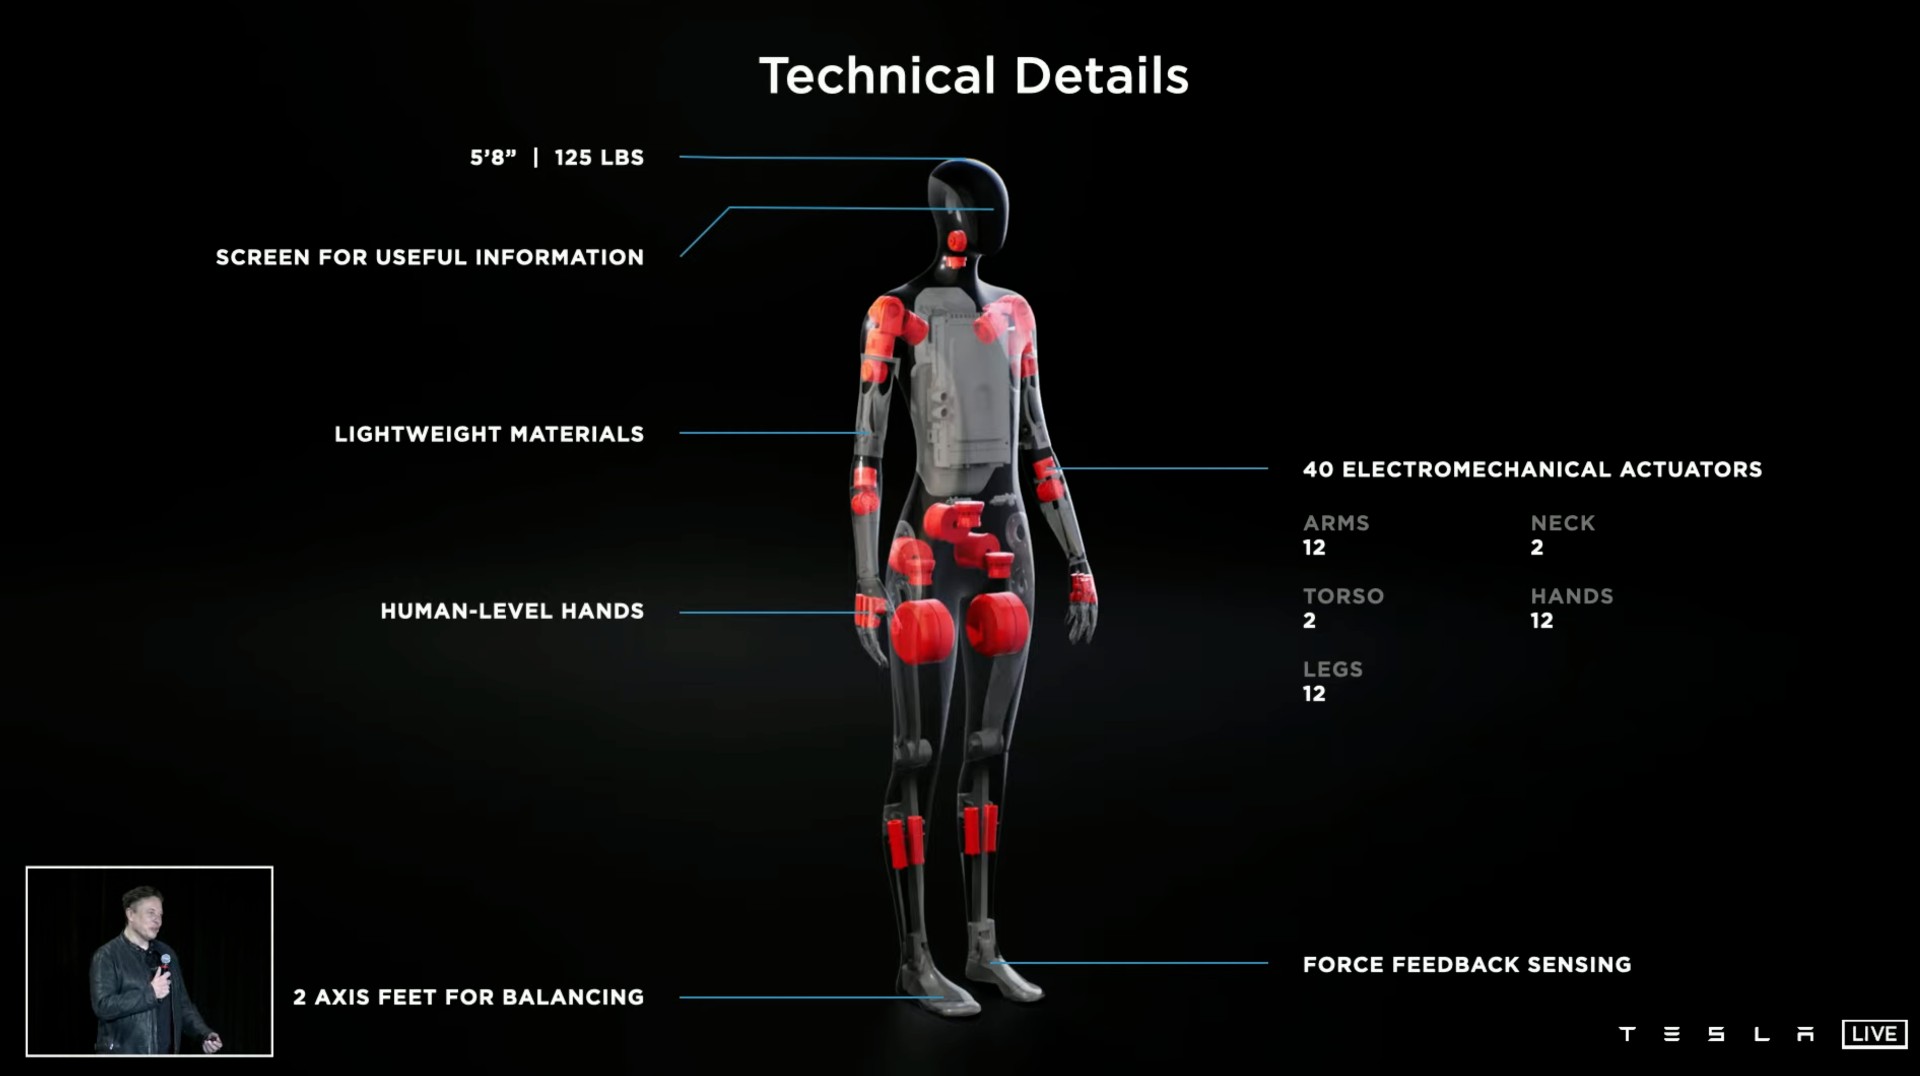 Elon Musk announced a humanoid robot - Tesla Bot (VIDEO)